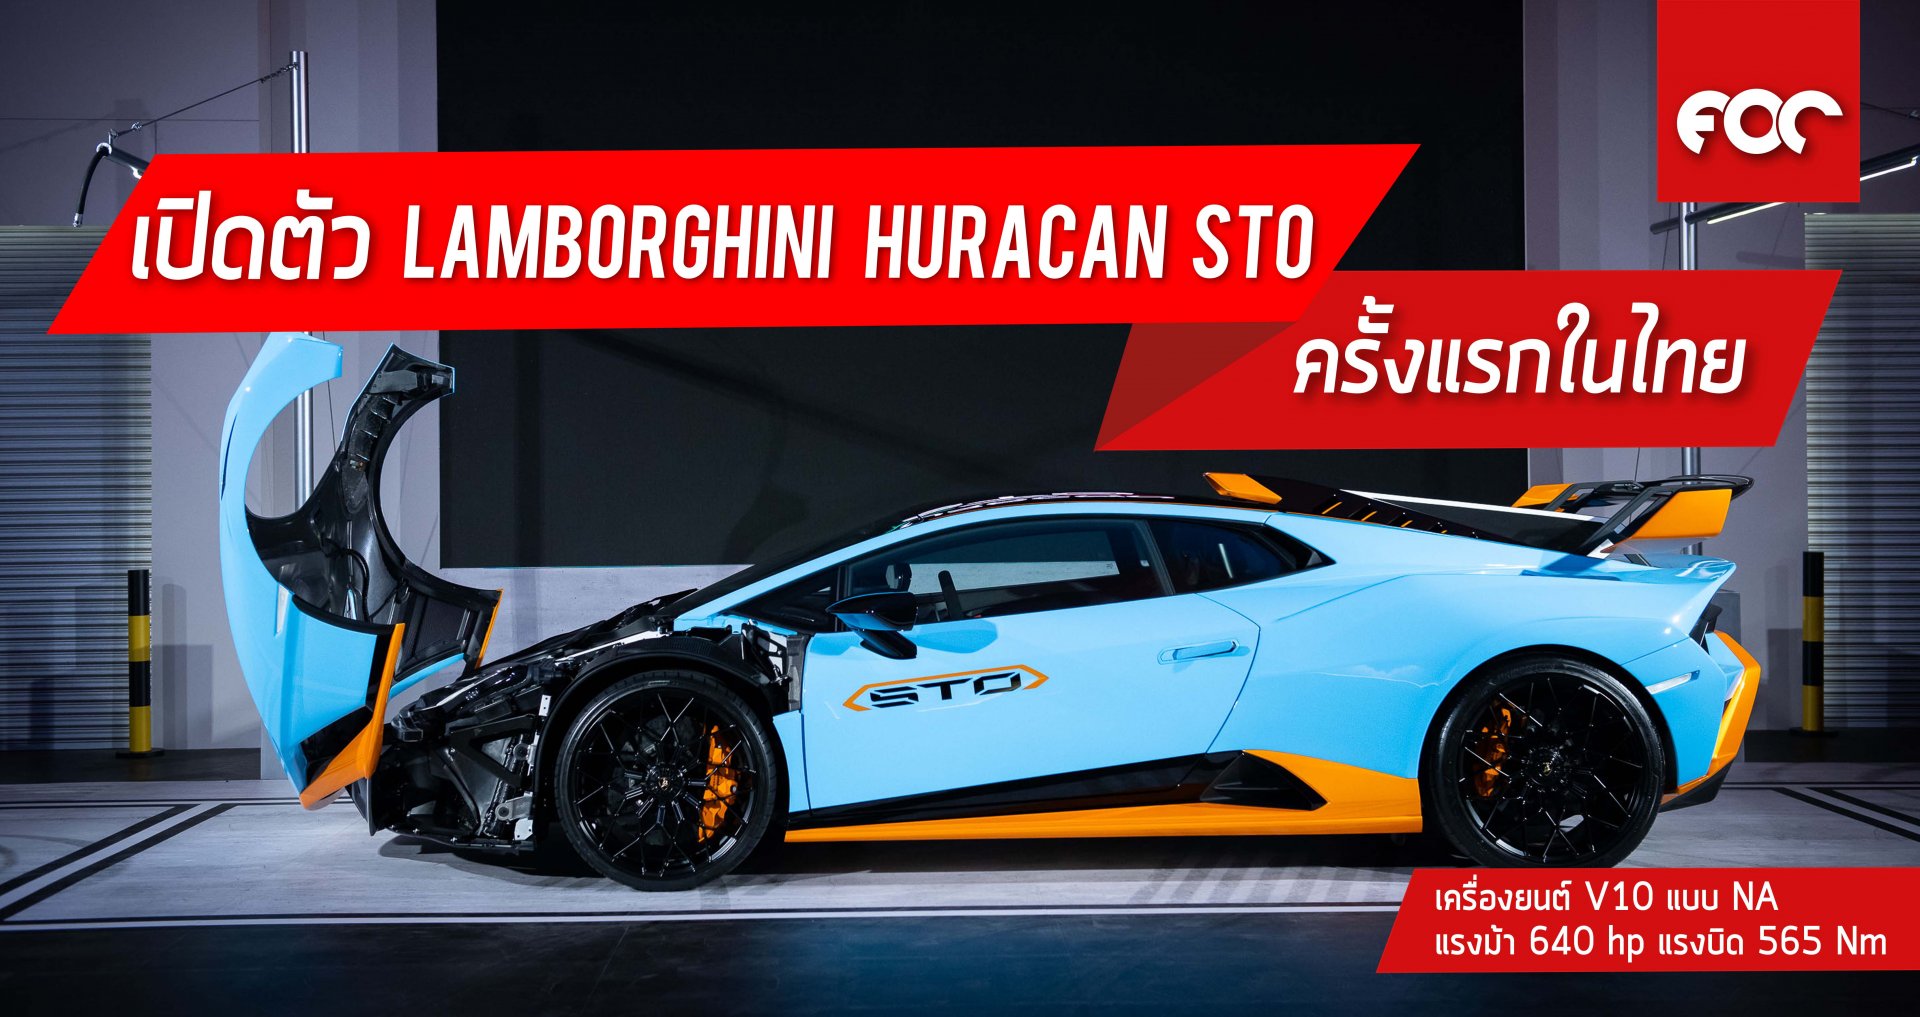 Lamborghini Huracán STO เผยโฉมครั้งแรกในประเทศไทย ราคา 29,990,000 บาท